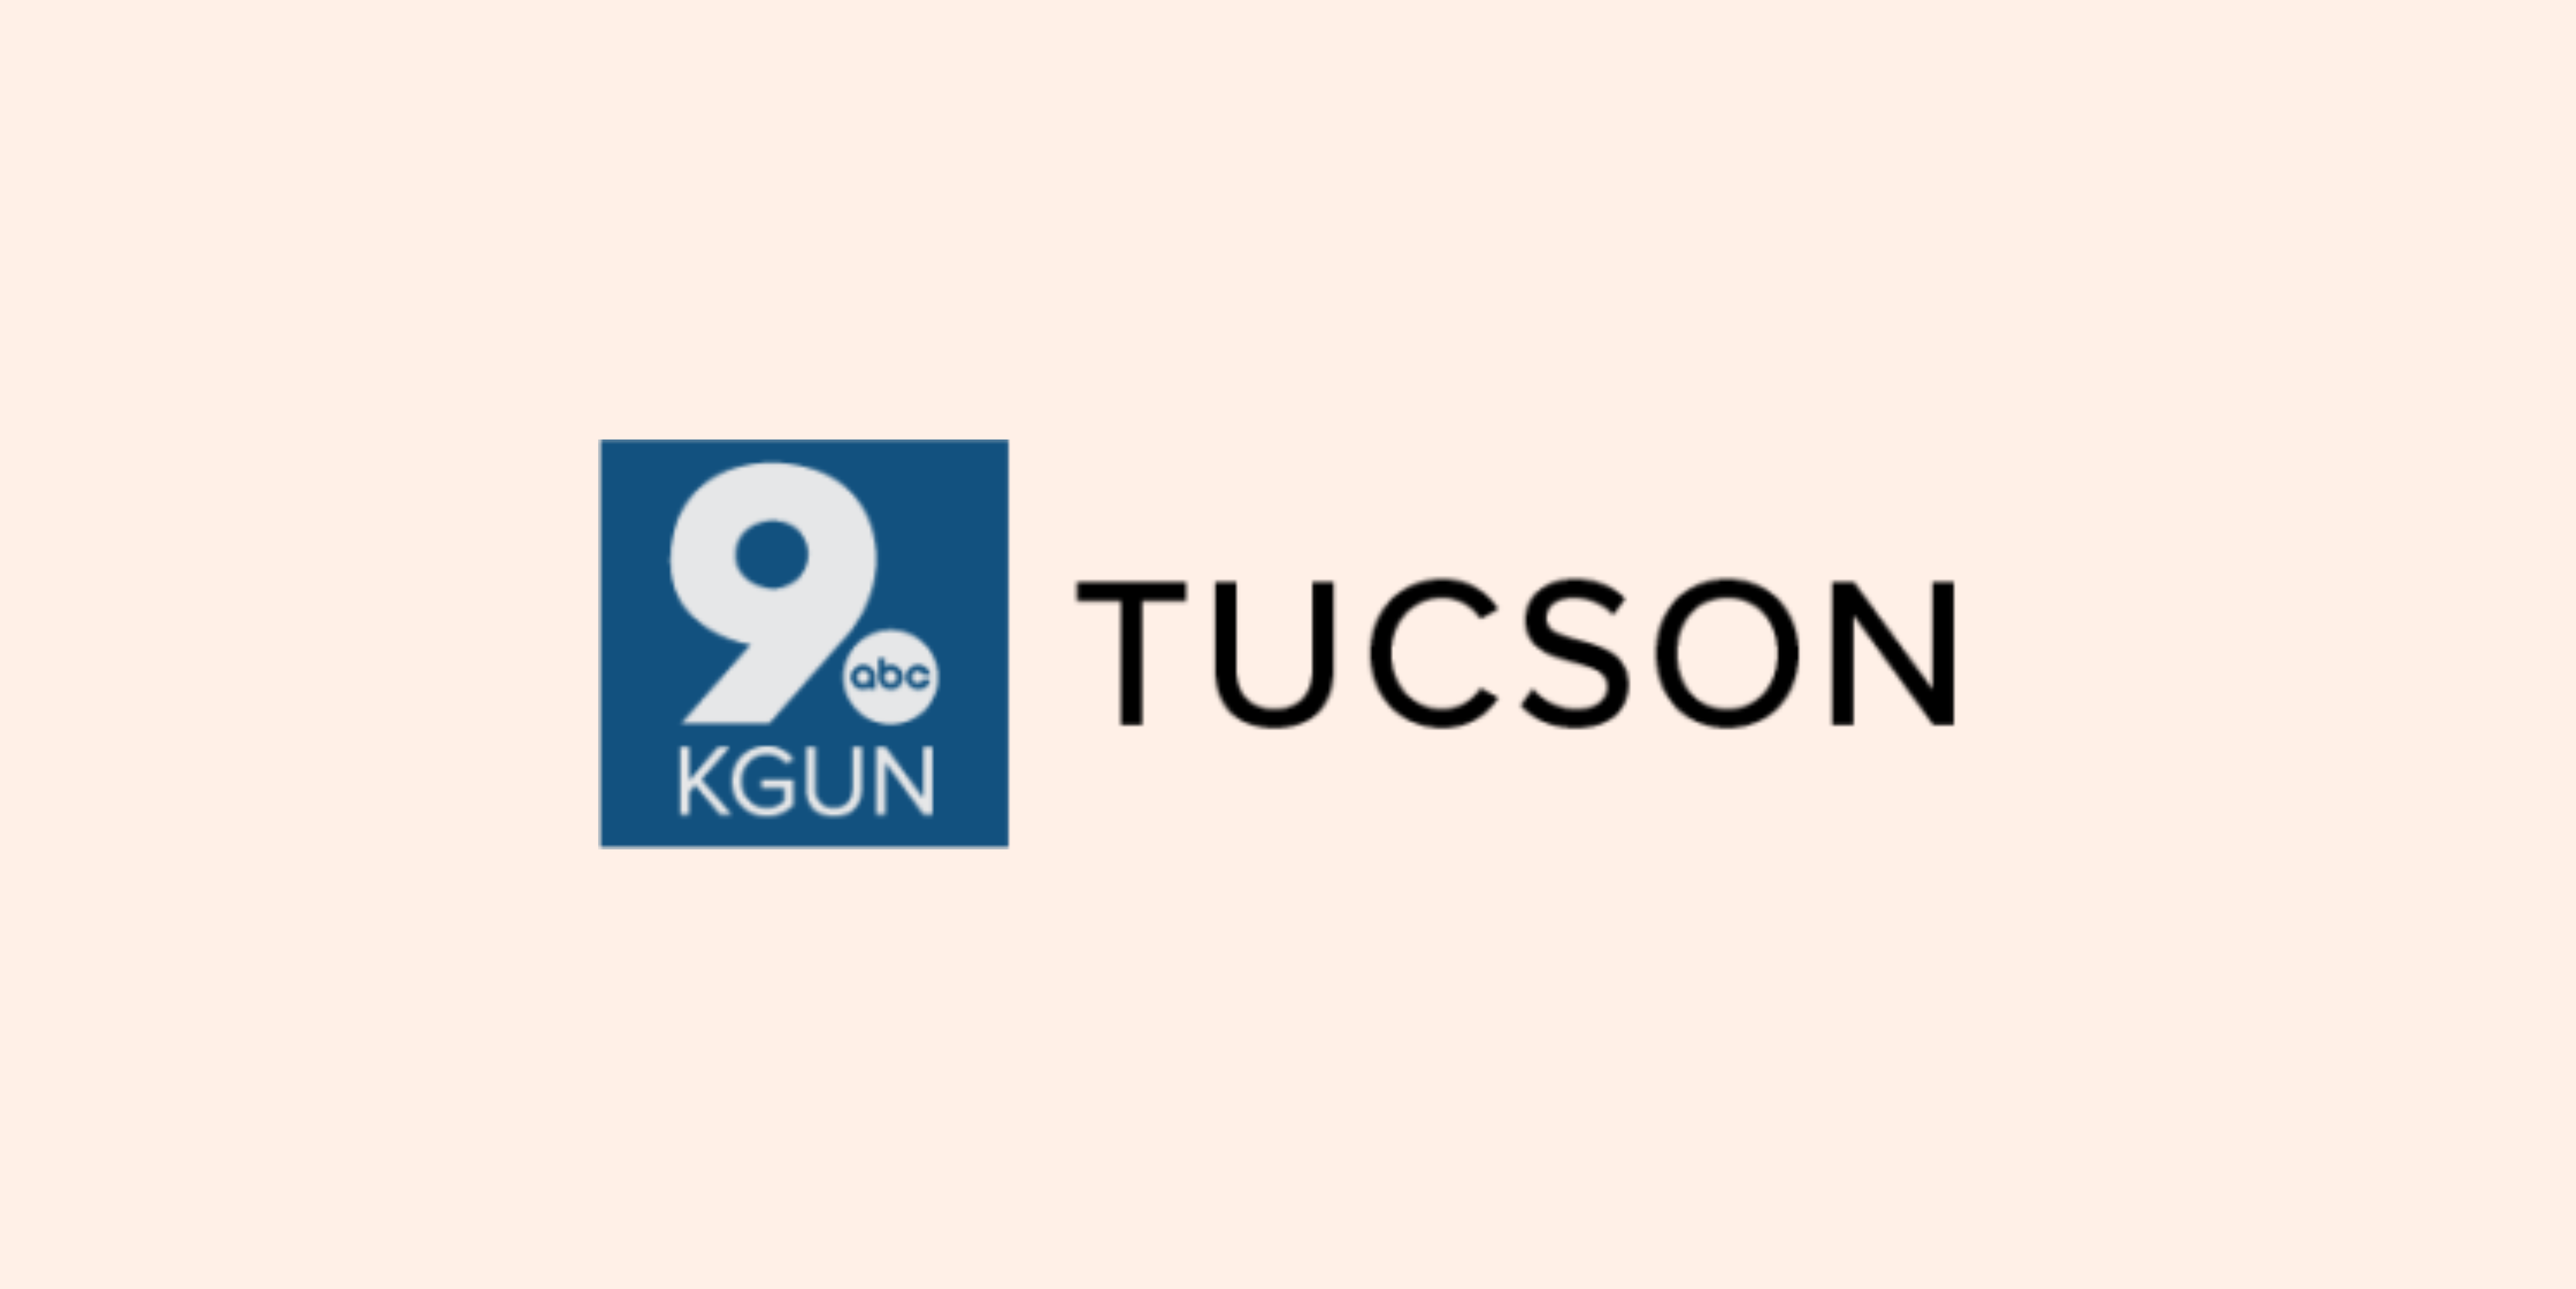 9 KGUN Tucson